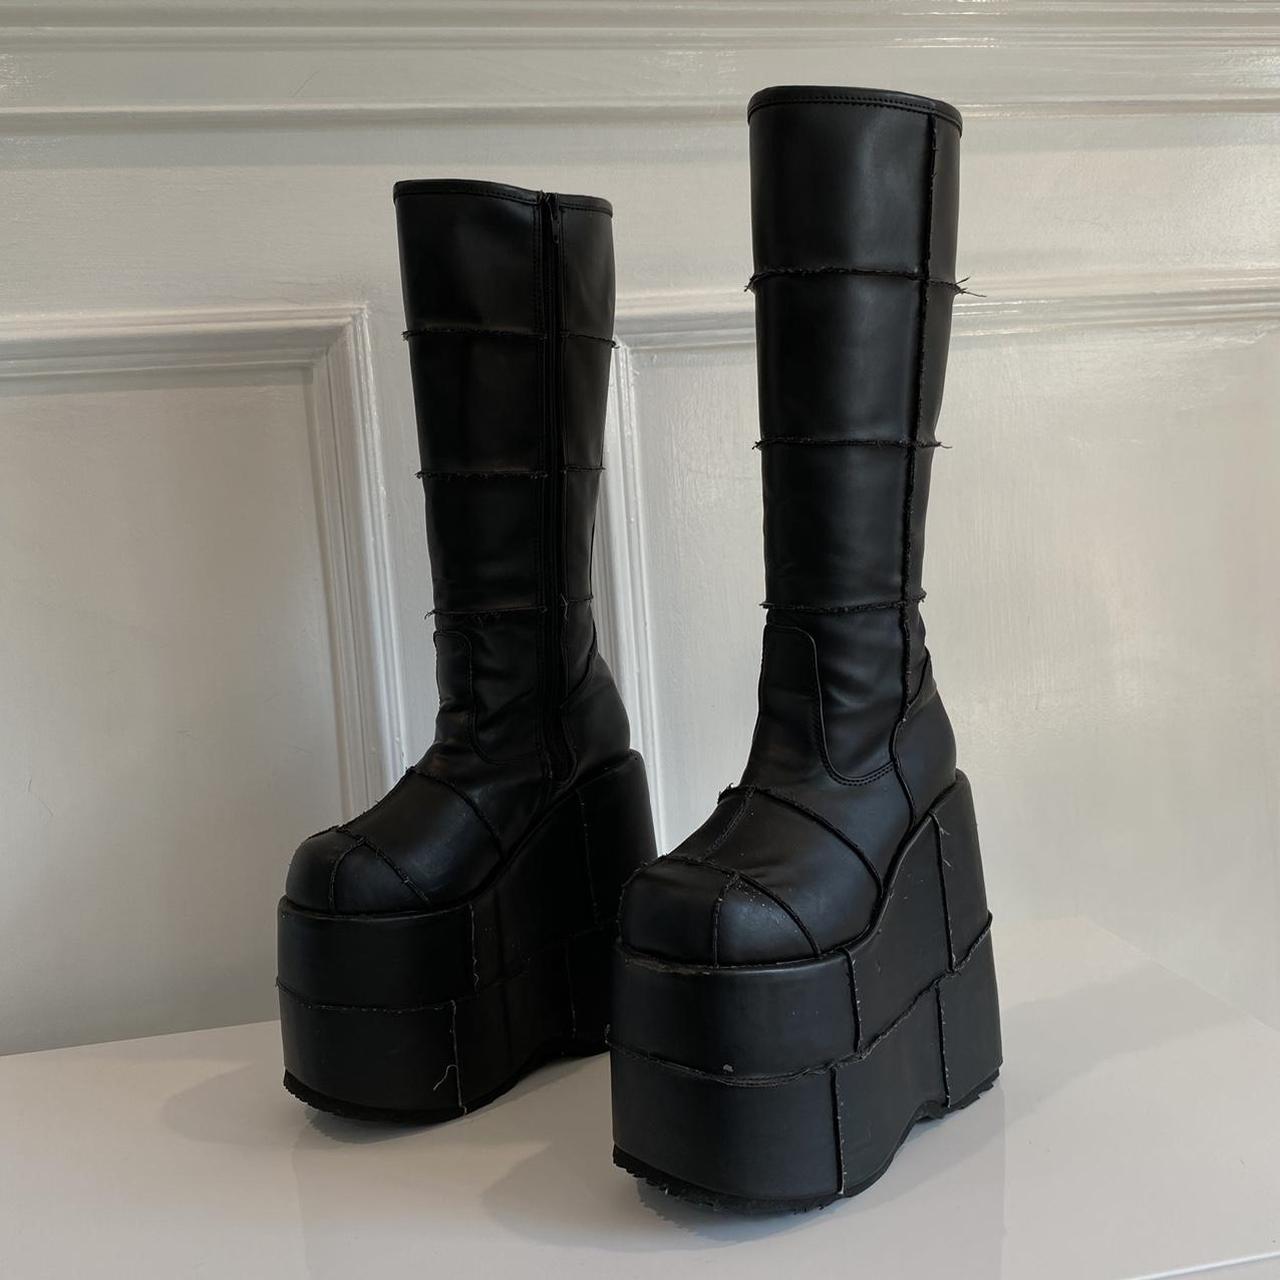 Product Image 3 - Black Demonia platform boots 

Size